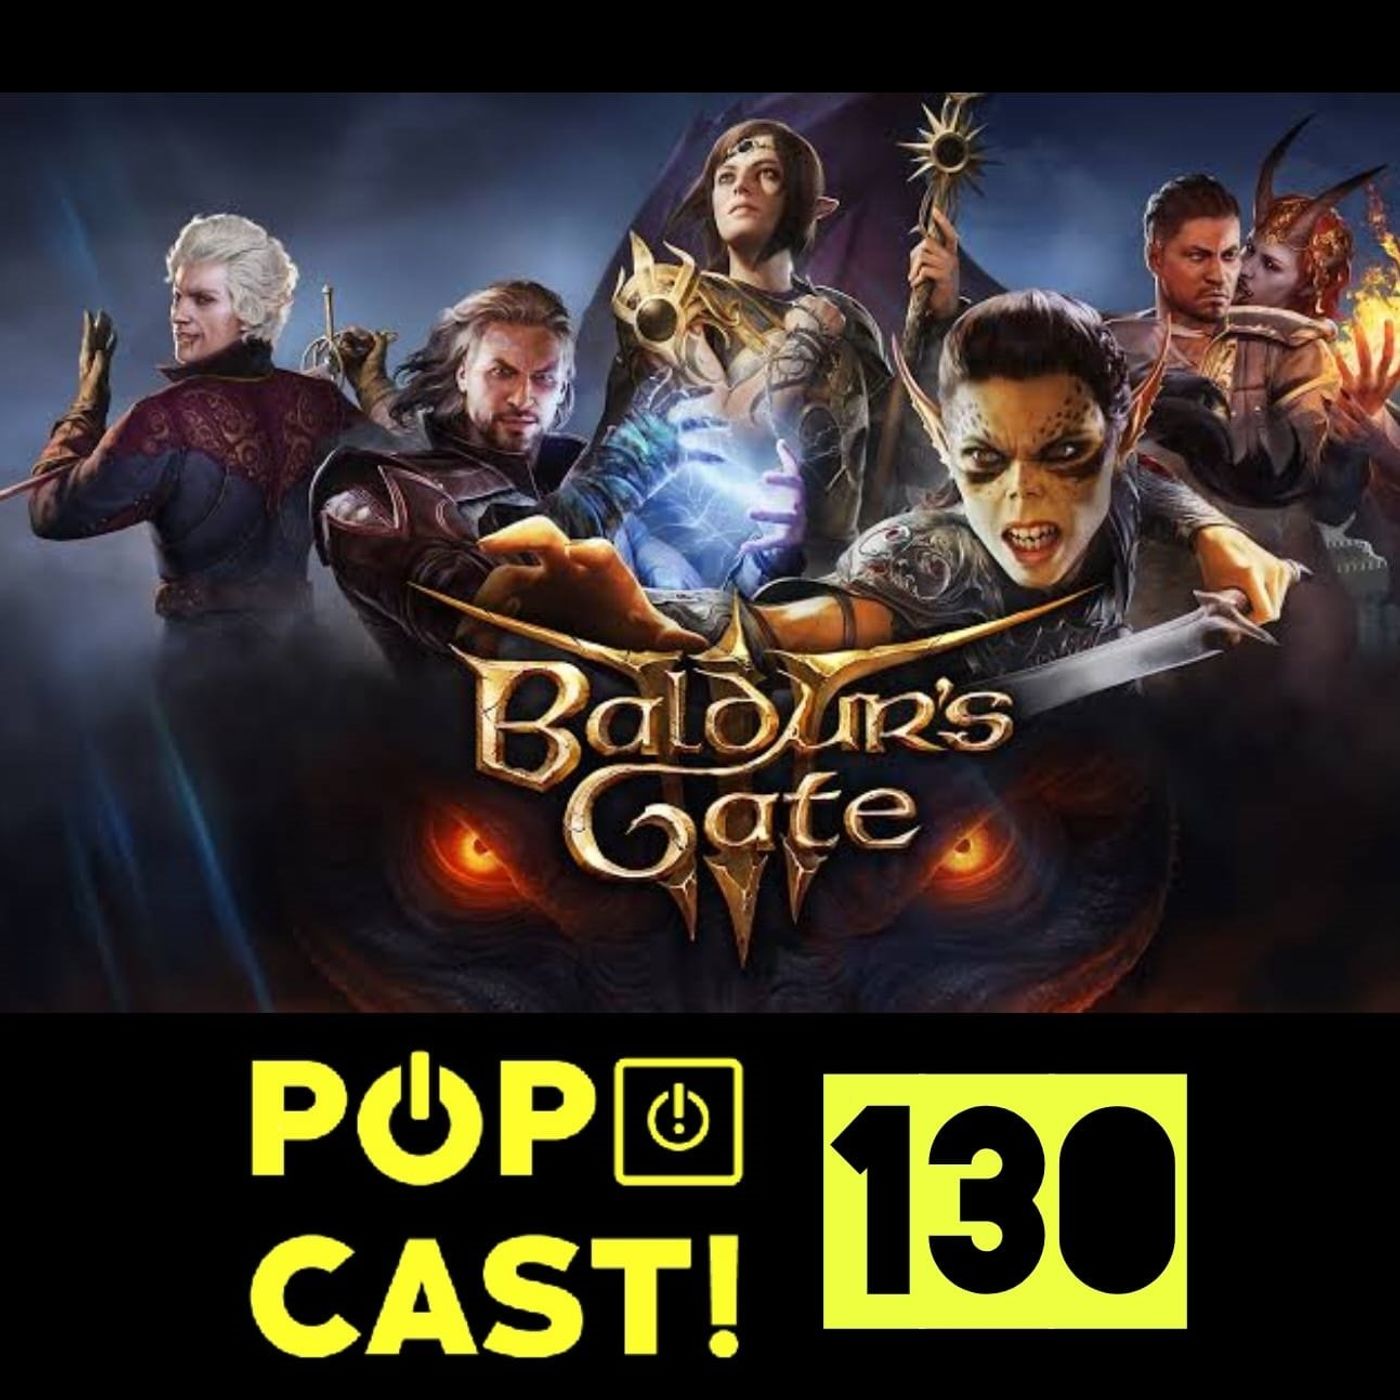 Pópcast! #130 - Baldur's Gate III